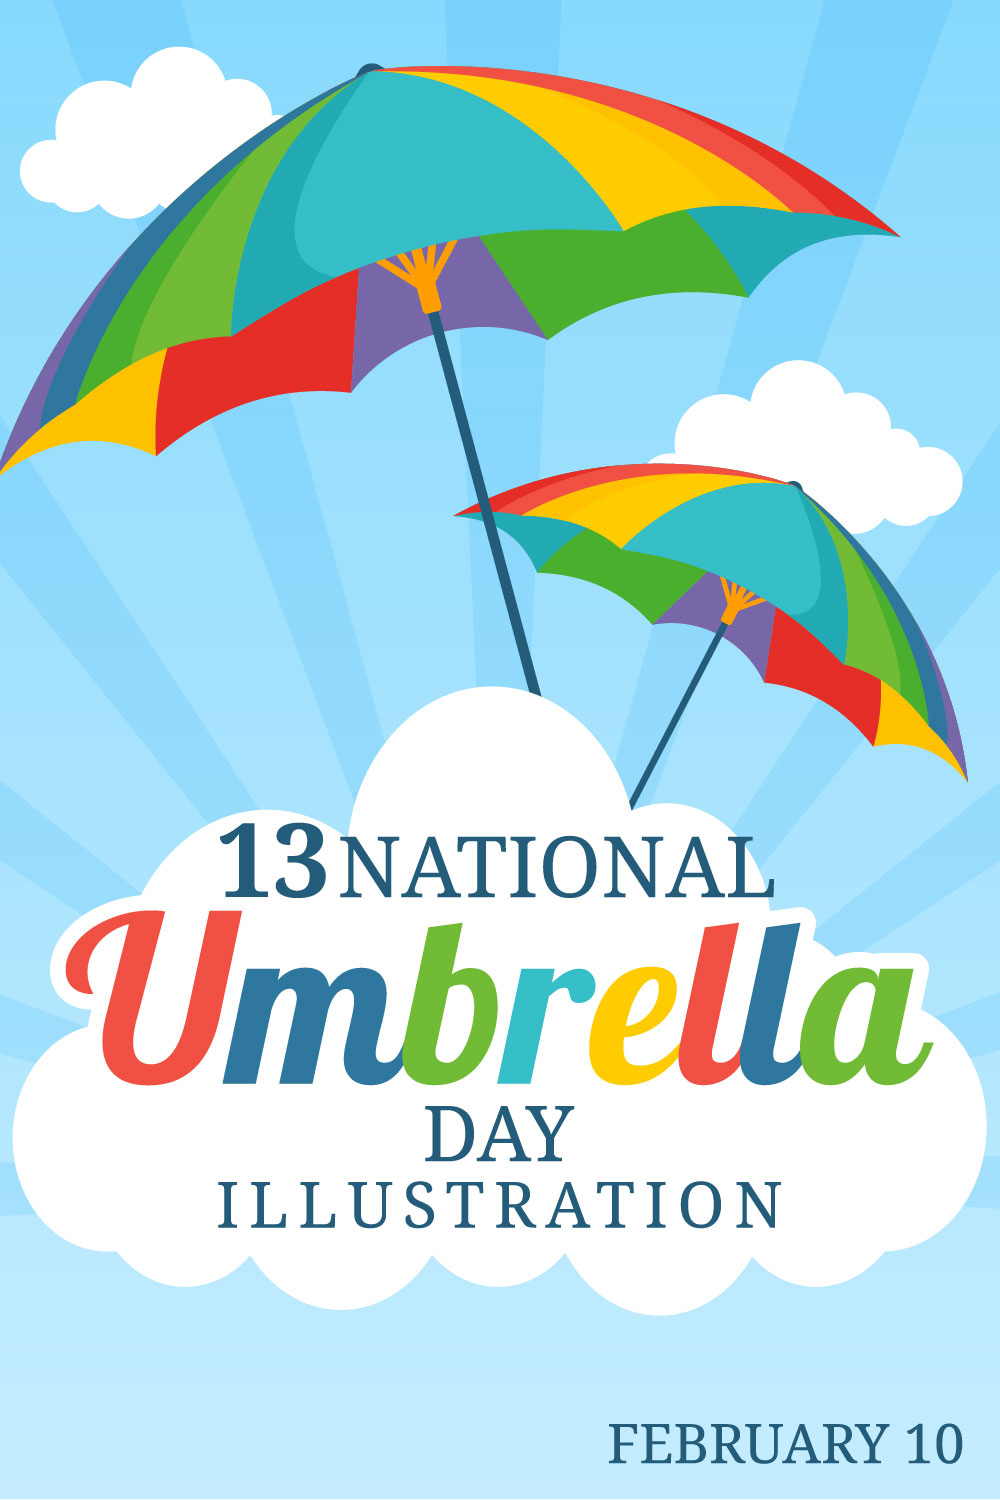 National Umbrella Day Illustration pinterest image.